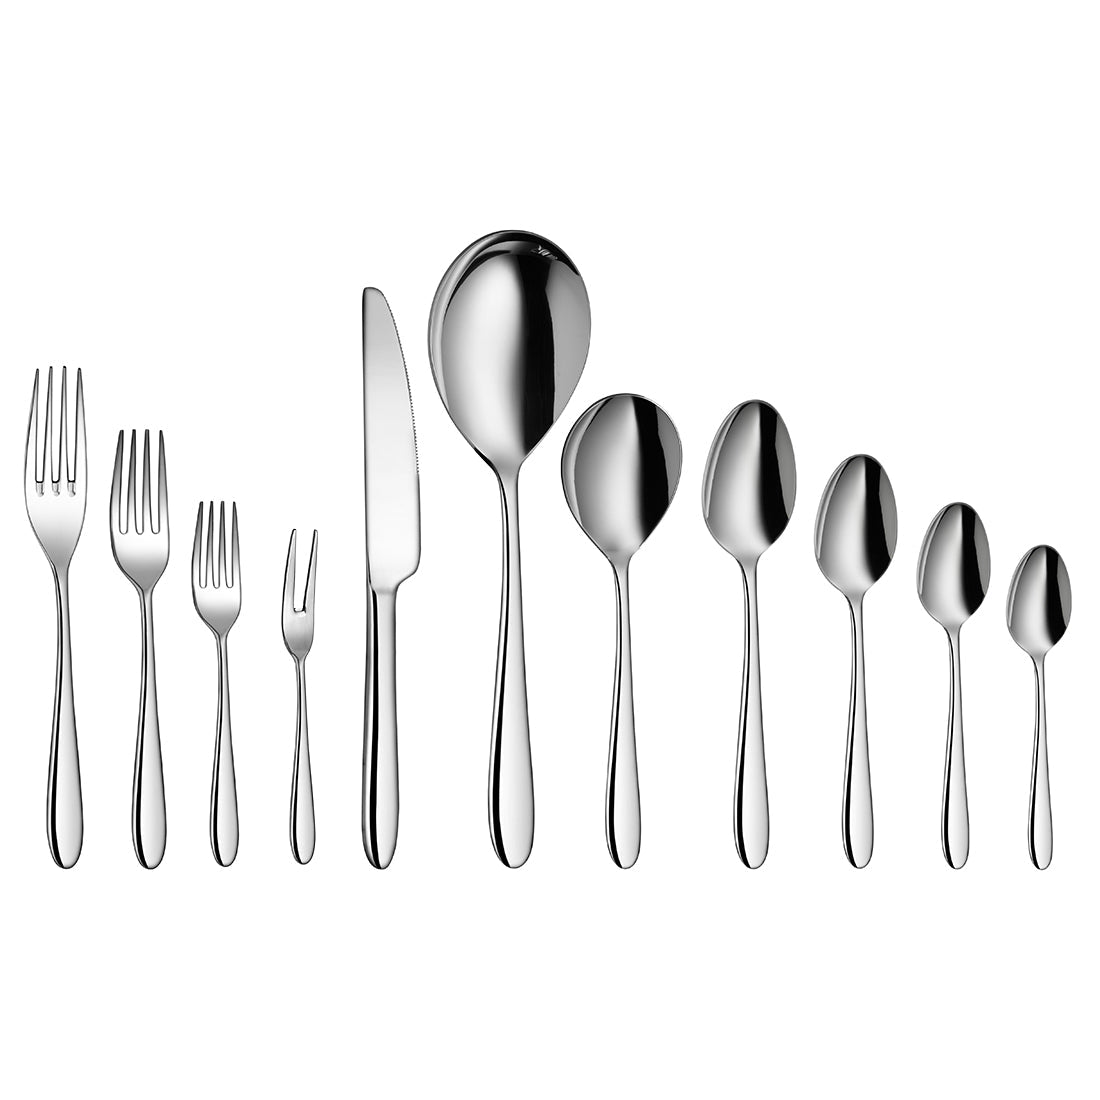 Stainless Steel Cutlery Gracy